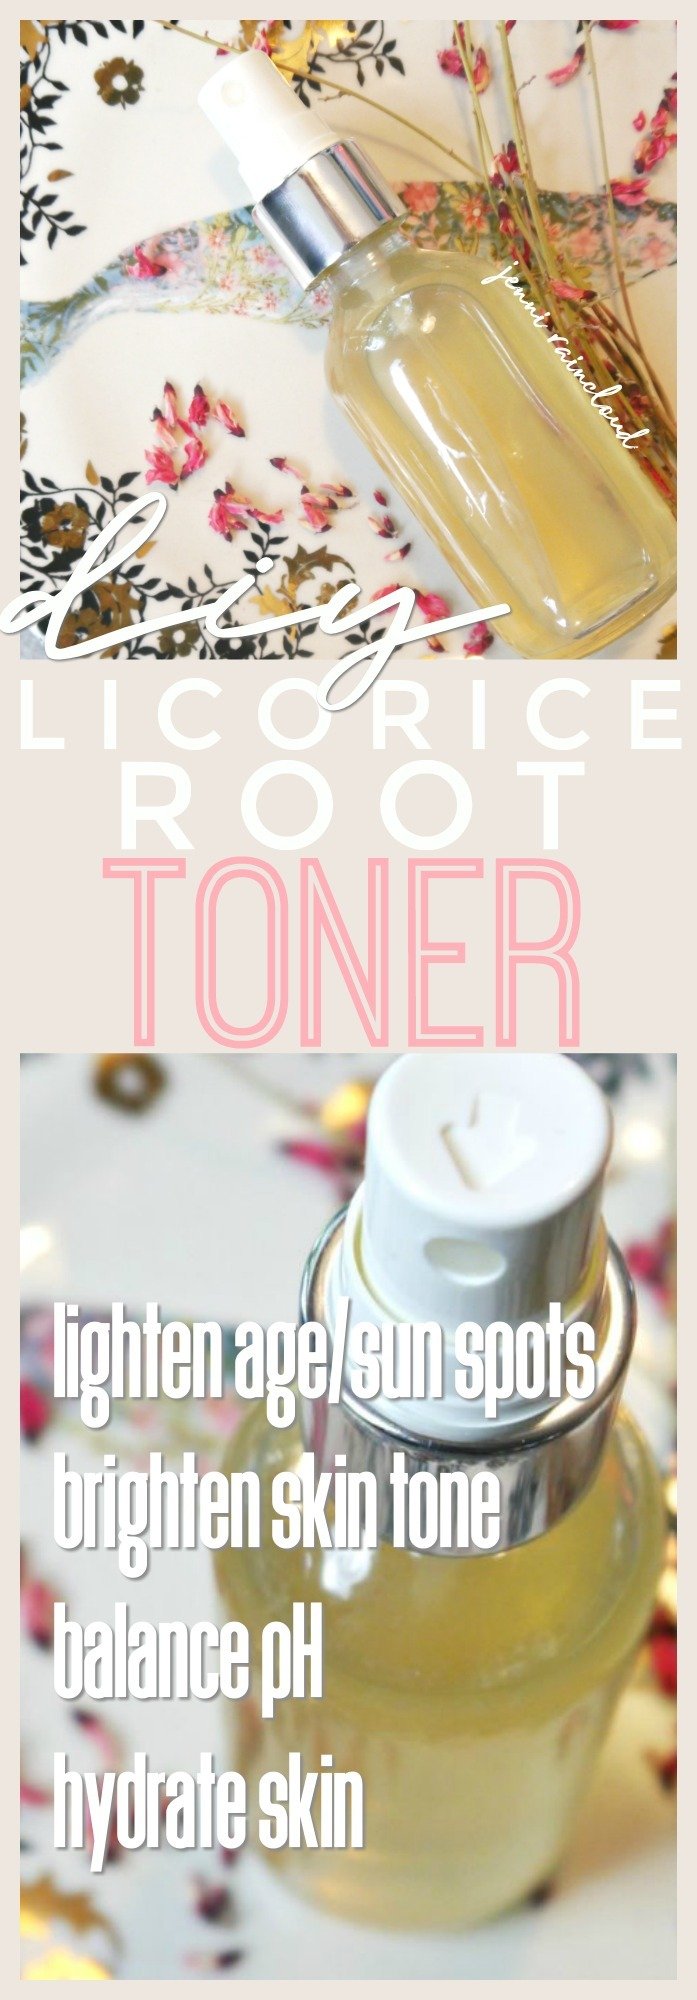 Licorice Root Toner